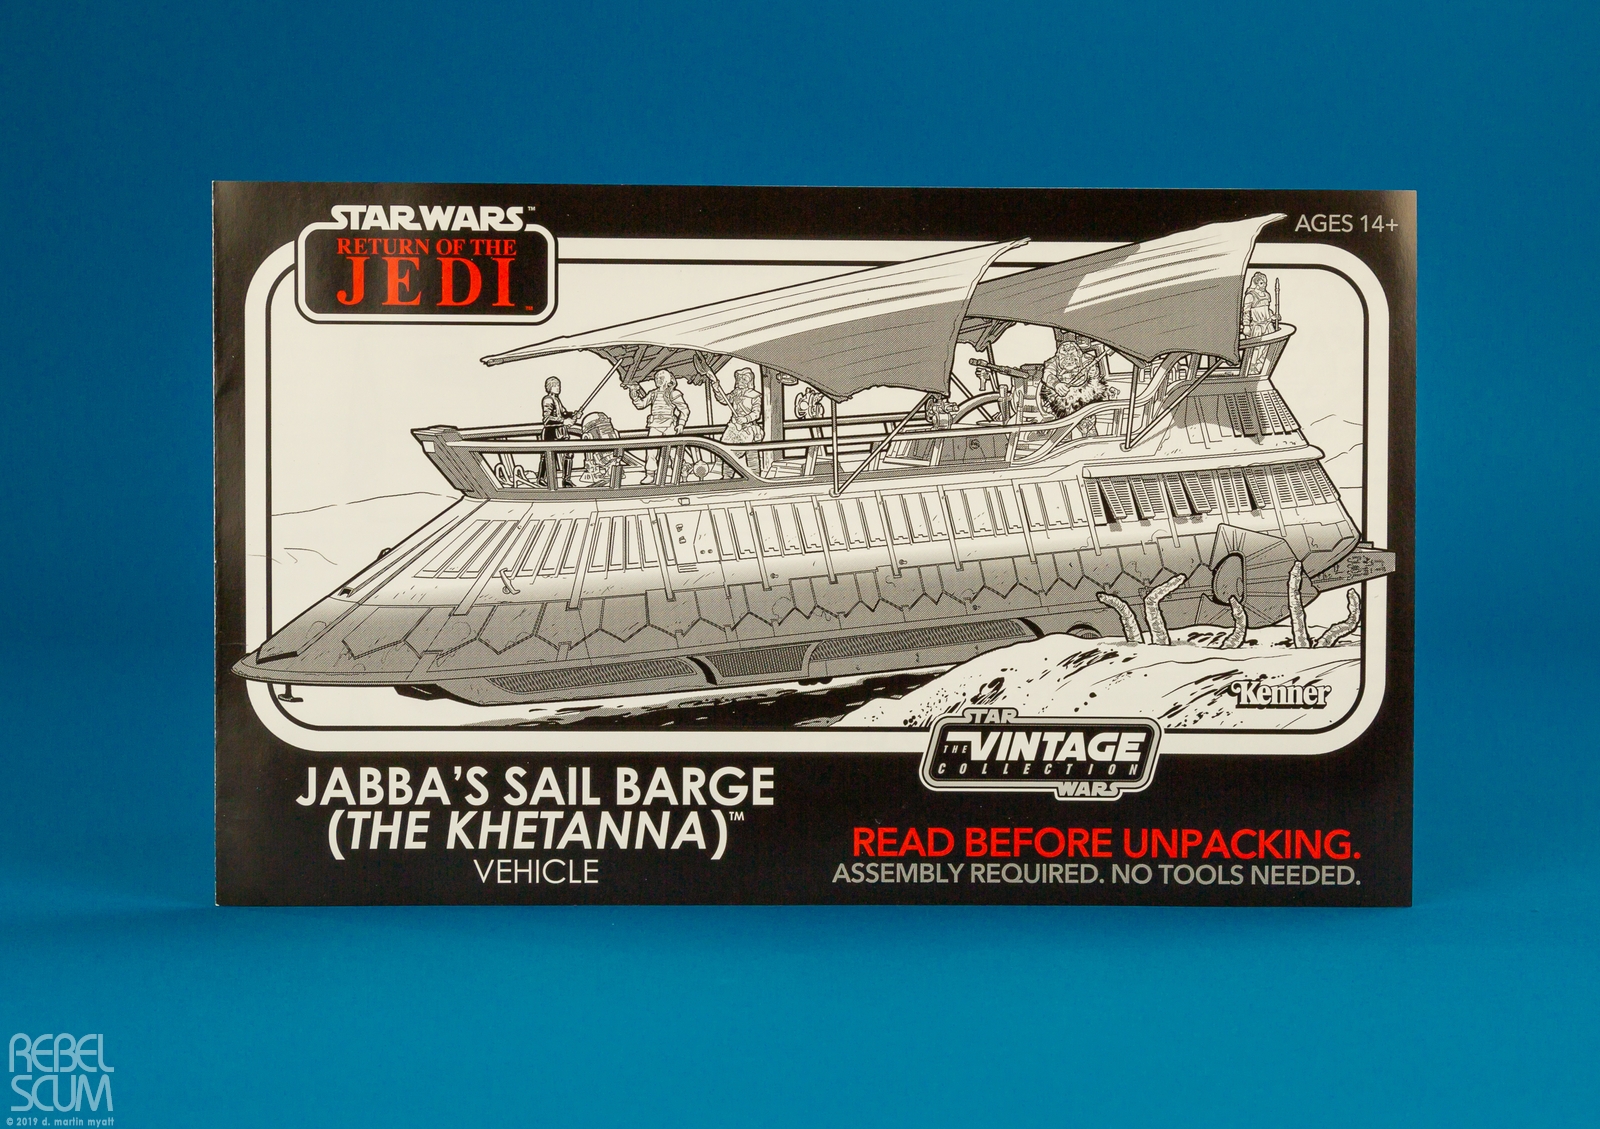 Jabbas-Sail-Barge-Khetanna-Hasbro-Haslab-Vintage-Collection-033.jpg